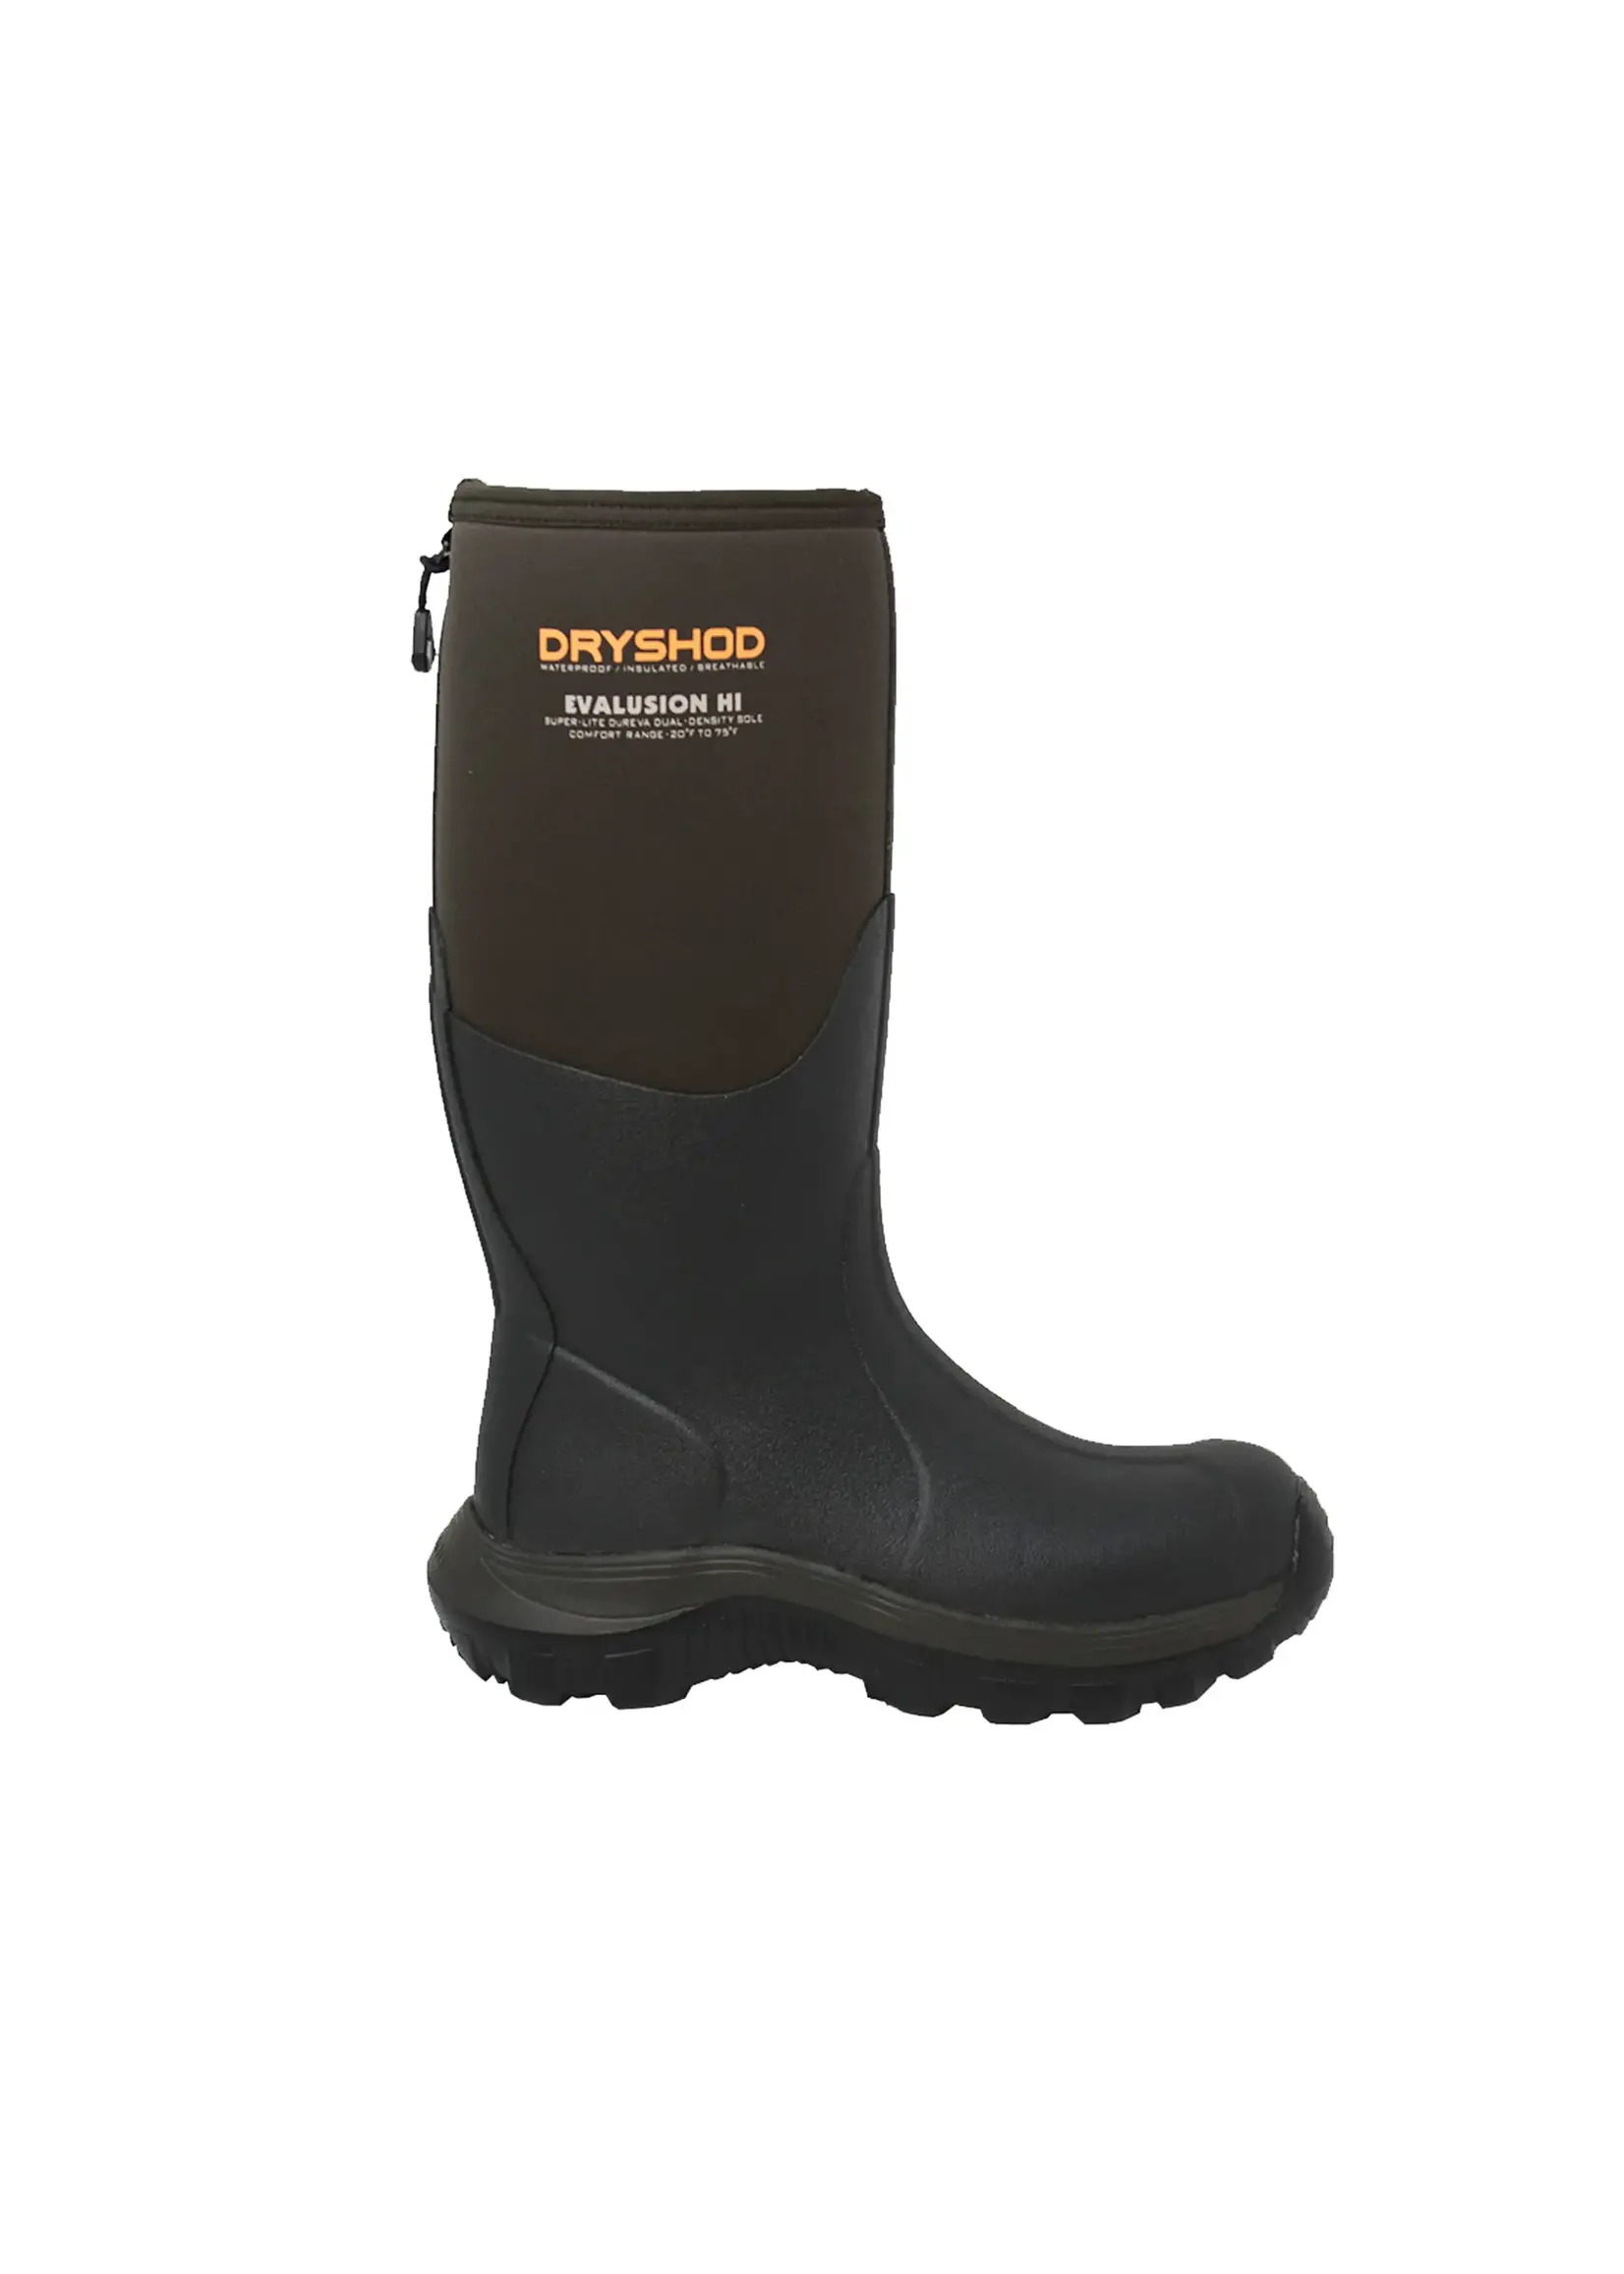 Dry Shod Dryshod M's Evalusion Hi Boot